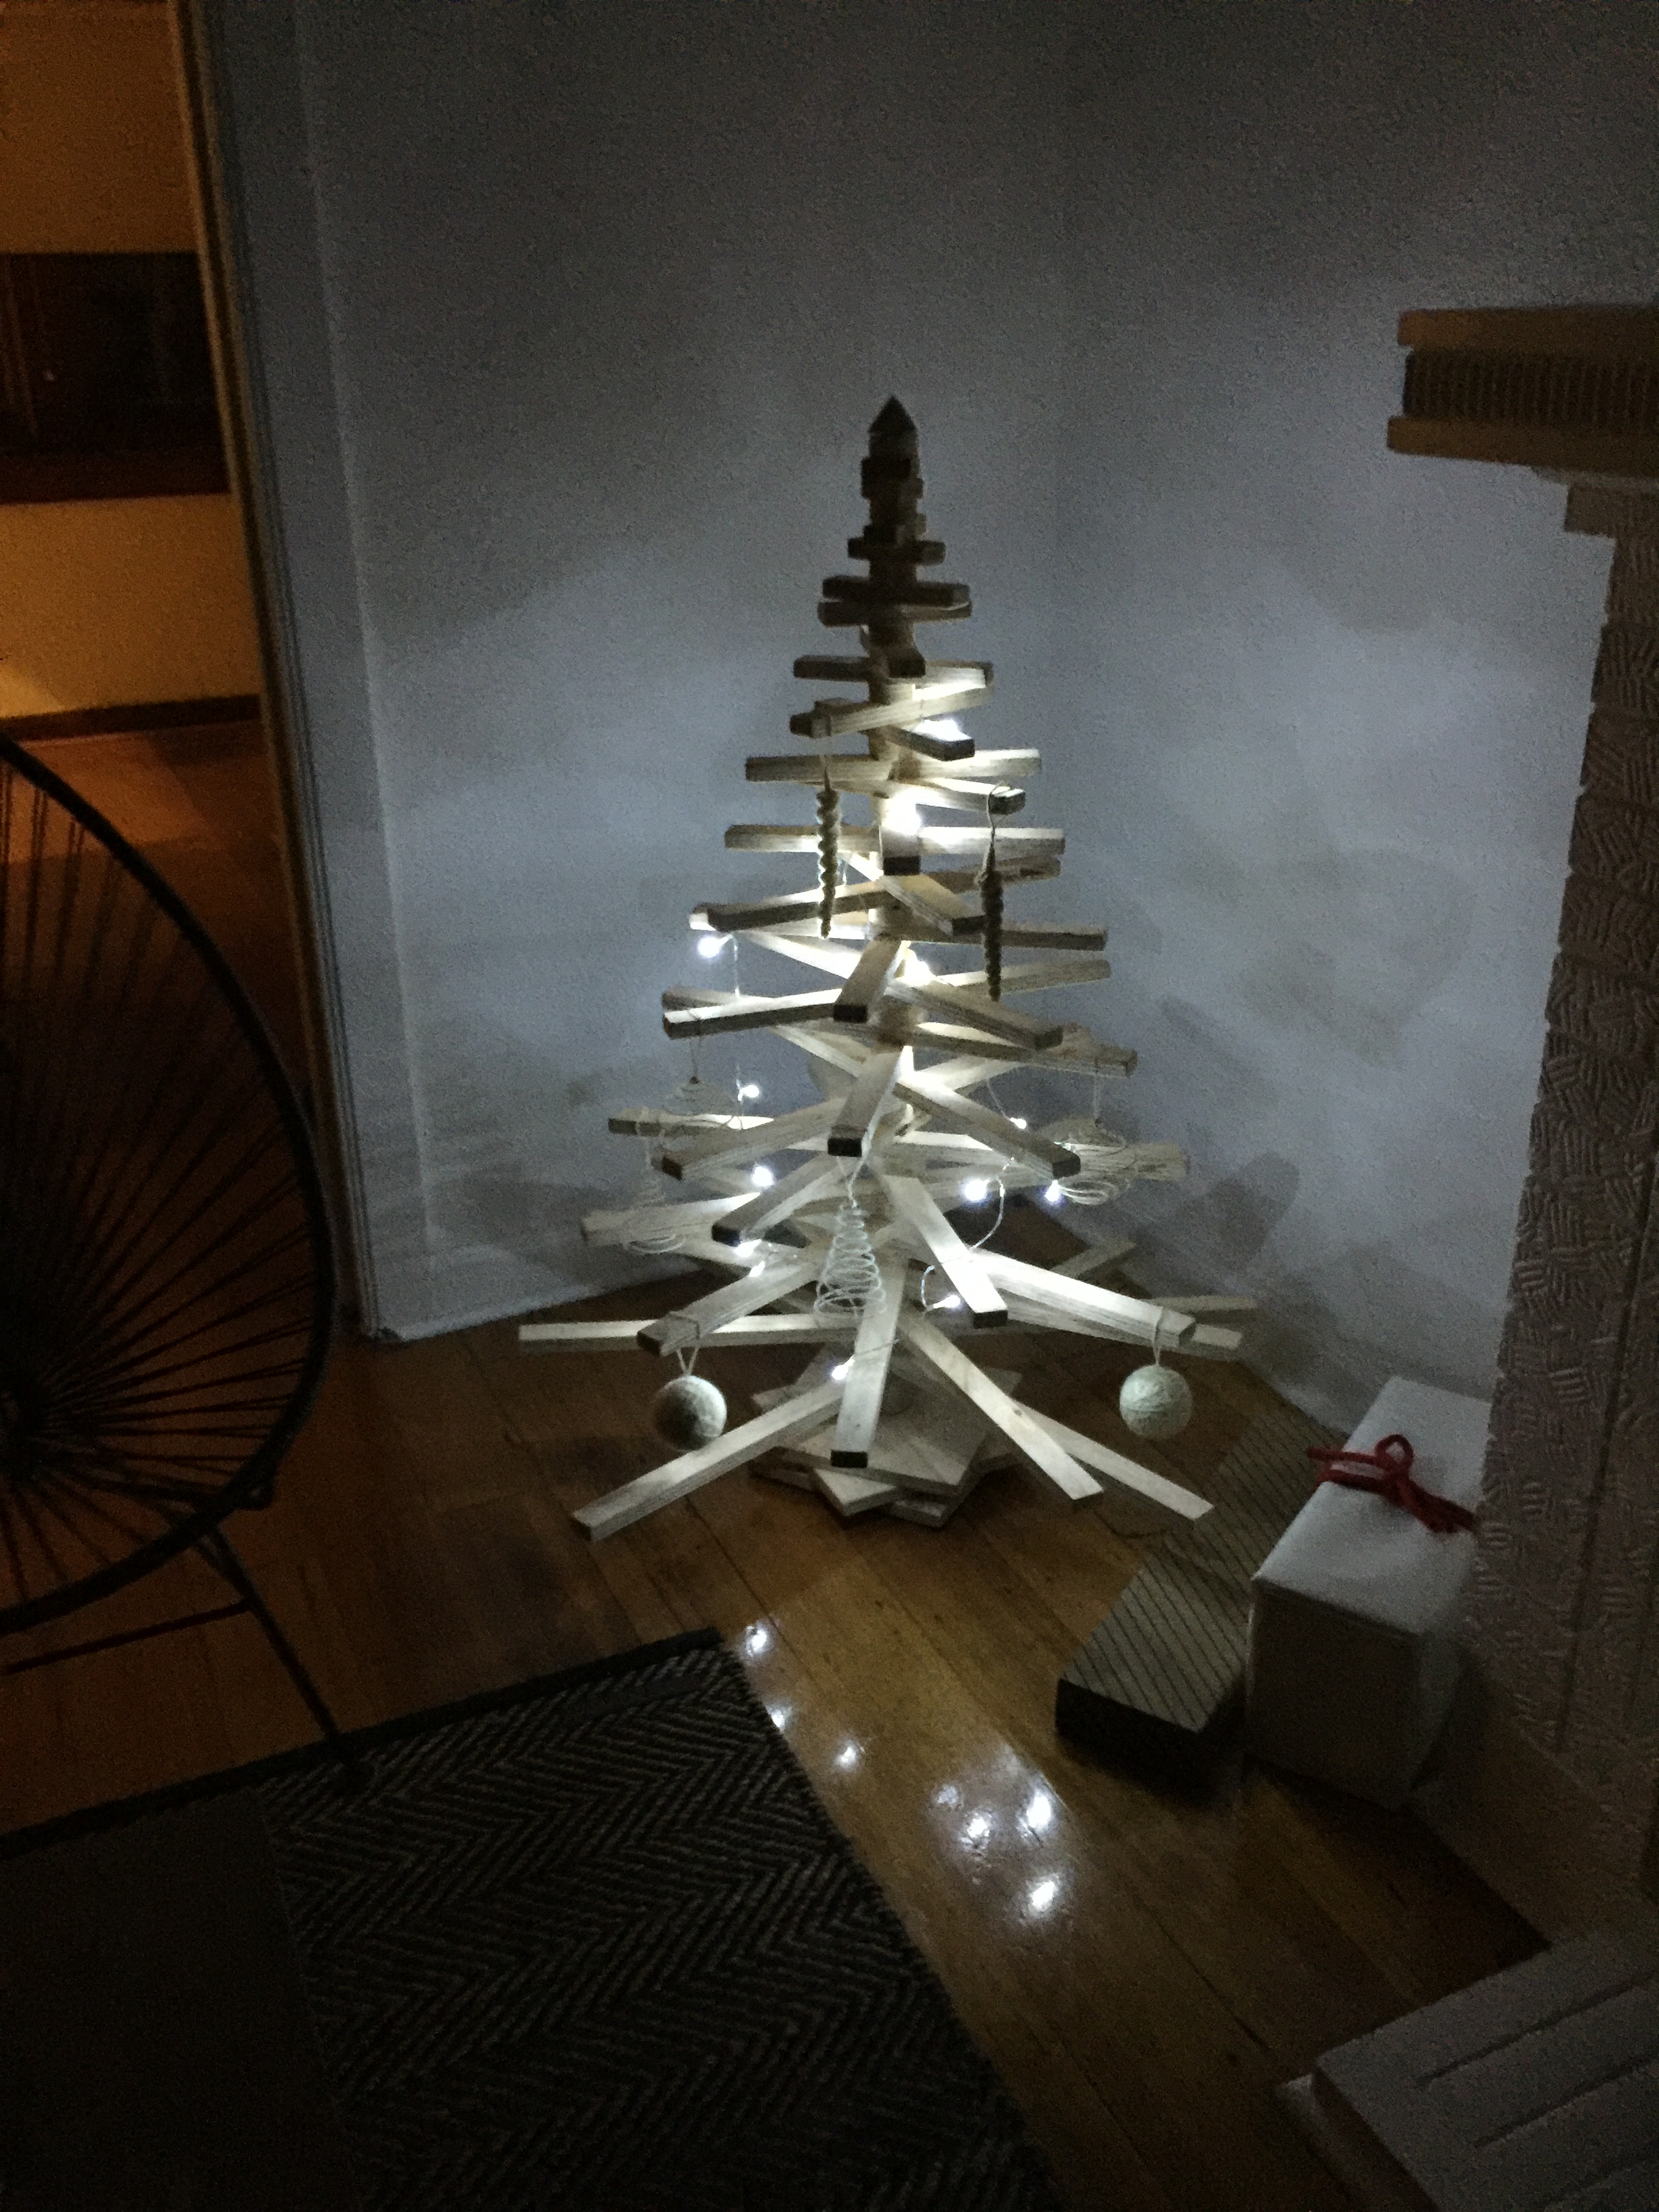 D.I.Y. plywood Christmas tree | Bunnings Workshop community